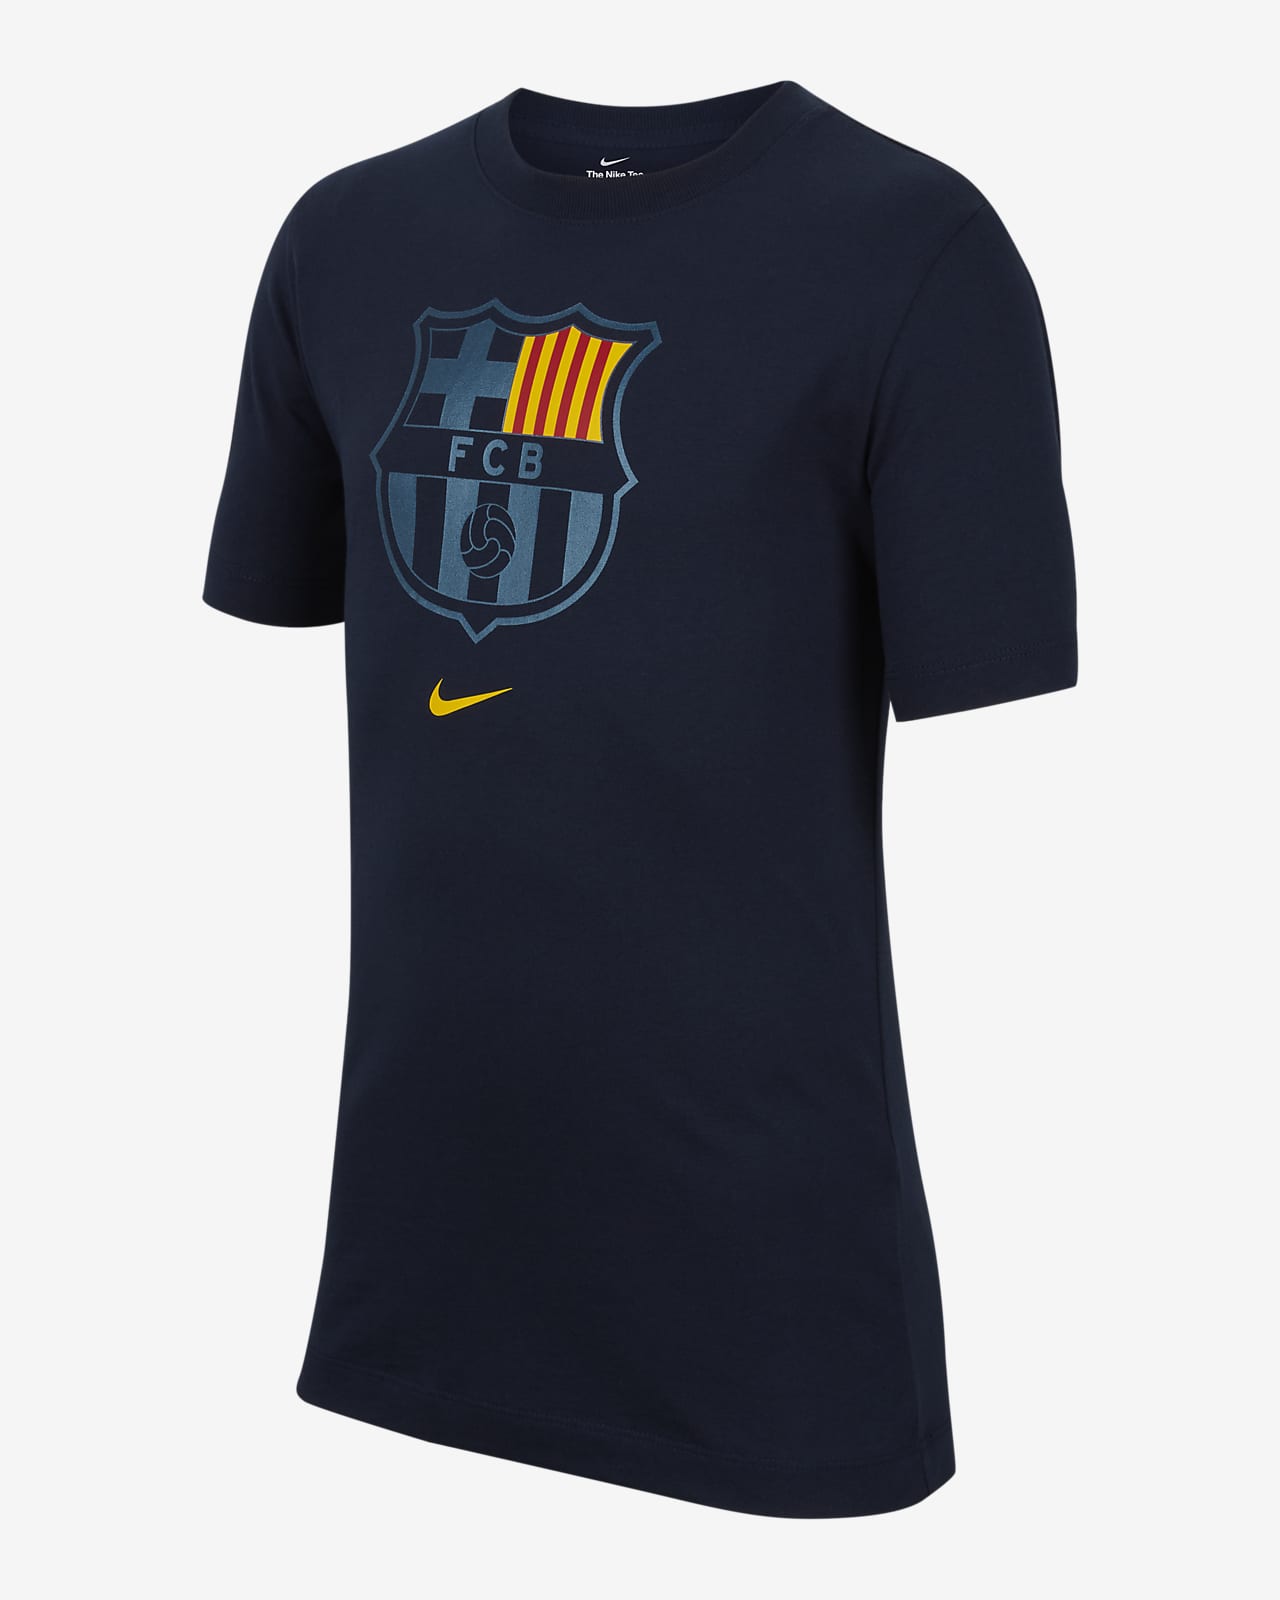 Playera de fútbol Nike para niños talla grande Barcelona Crest